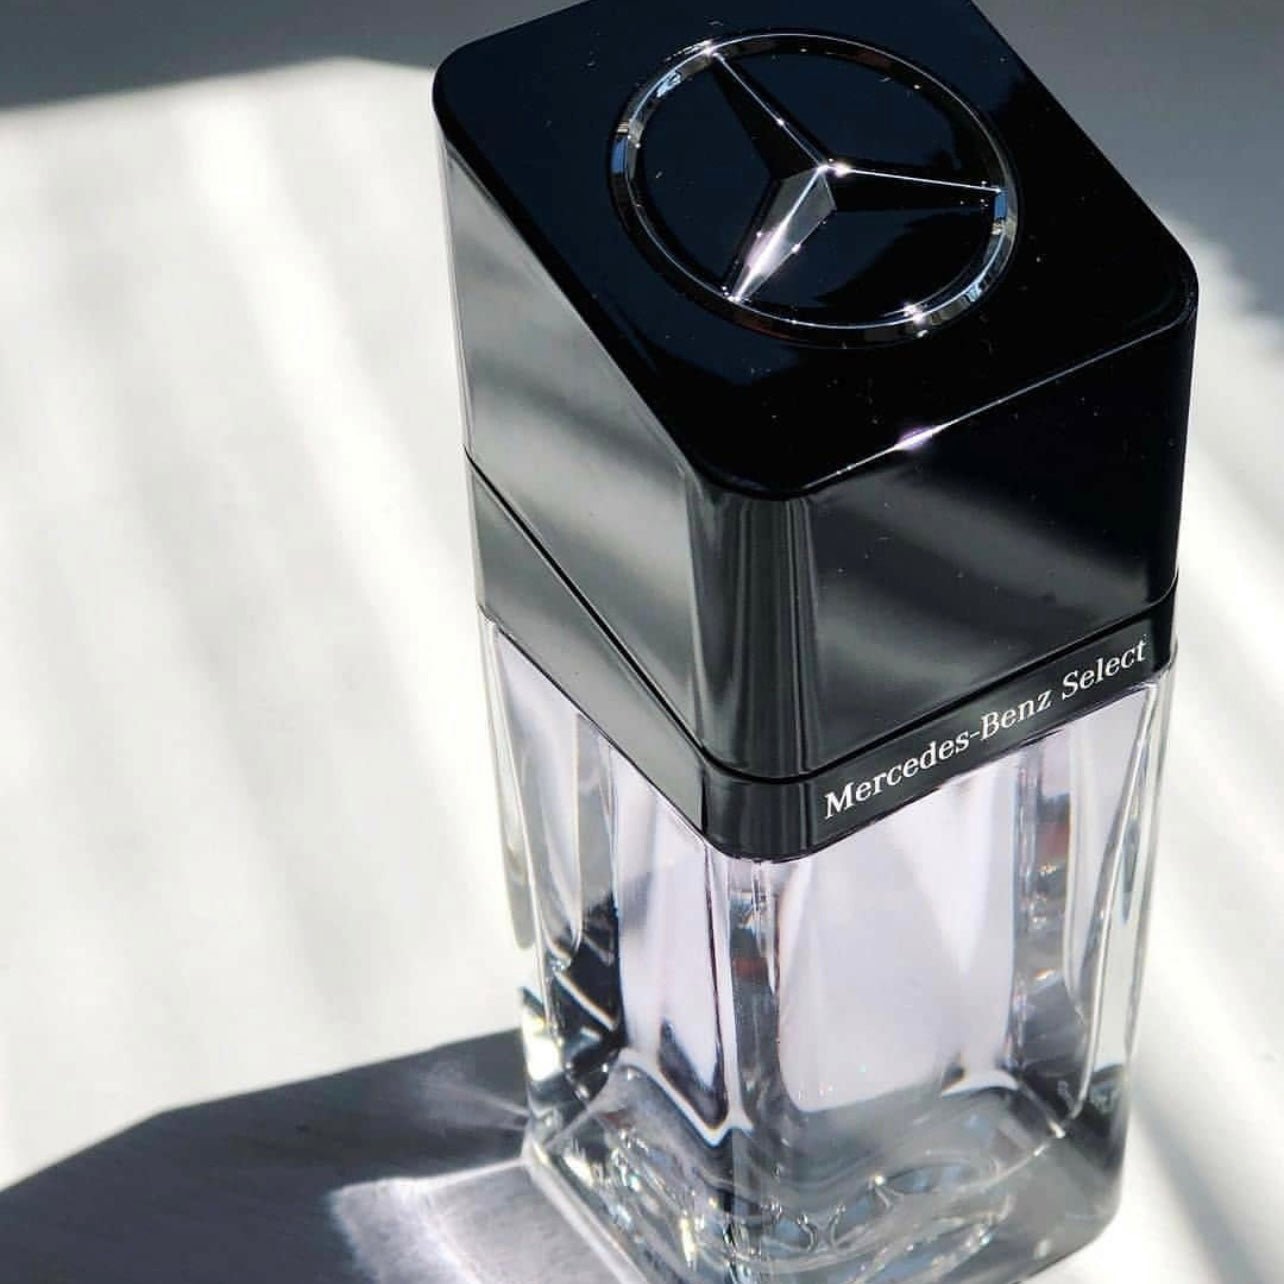 Mercedes Benz Select EDT | My Perfume Shop Australia